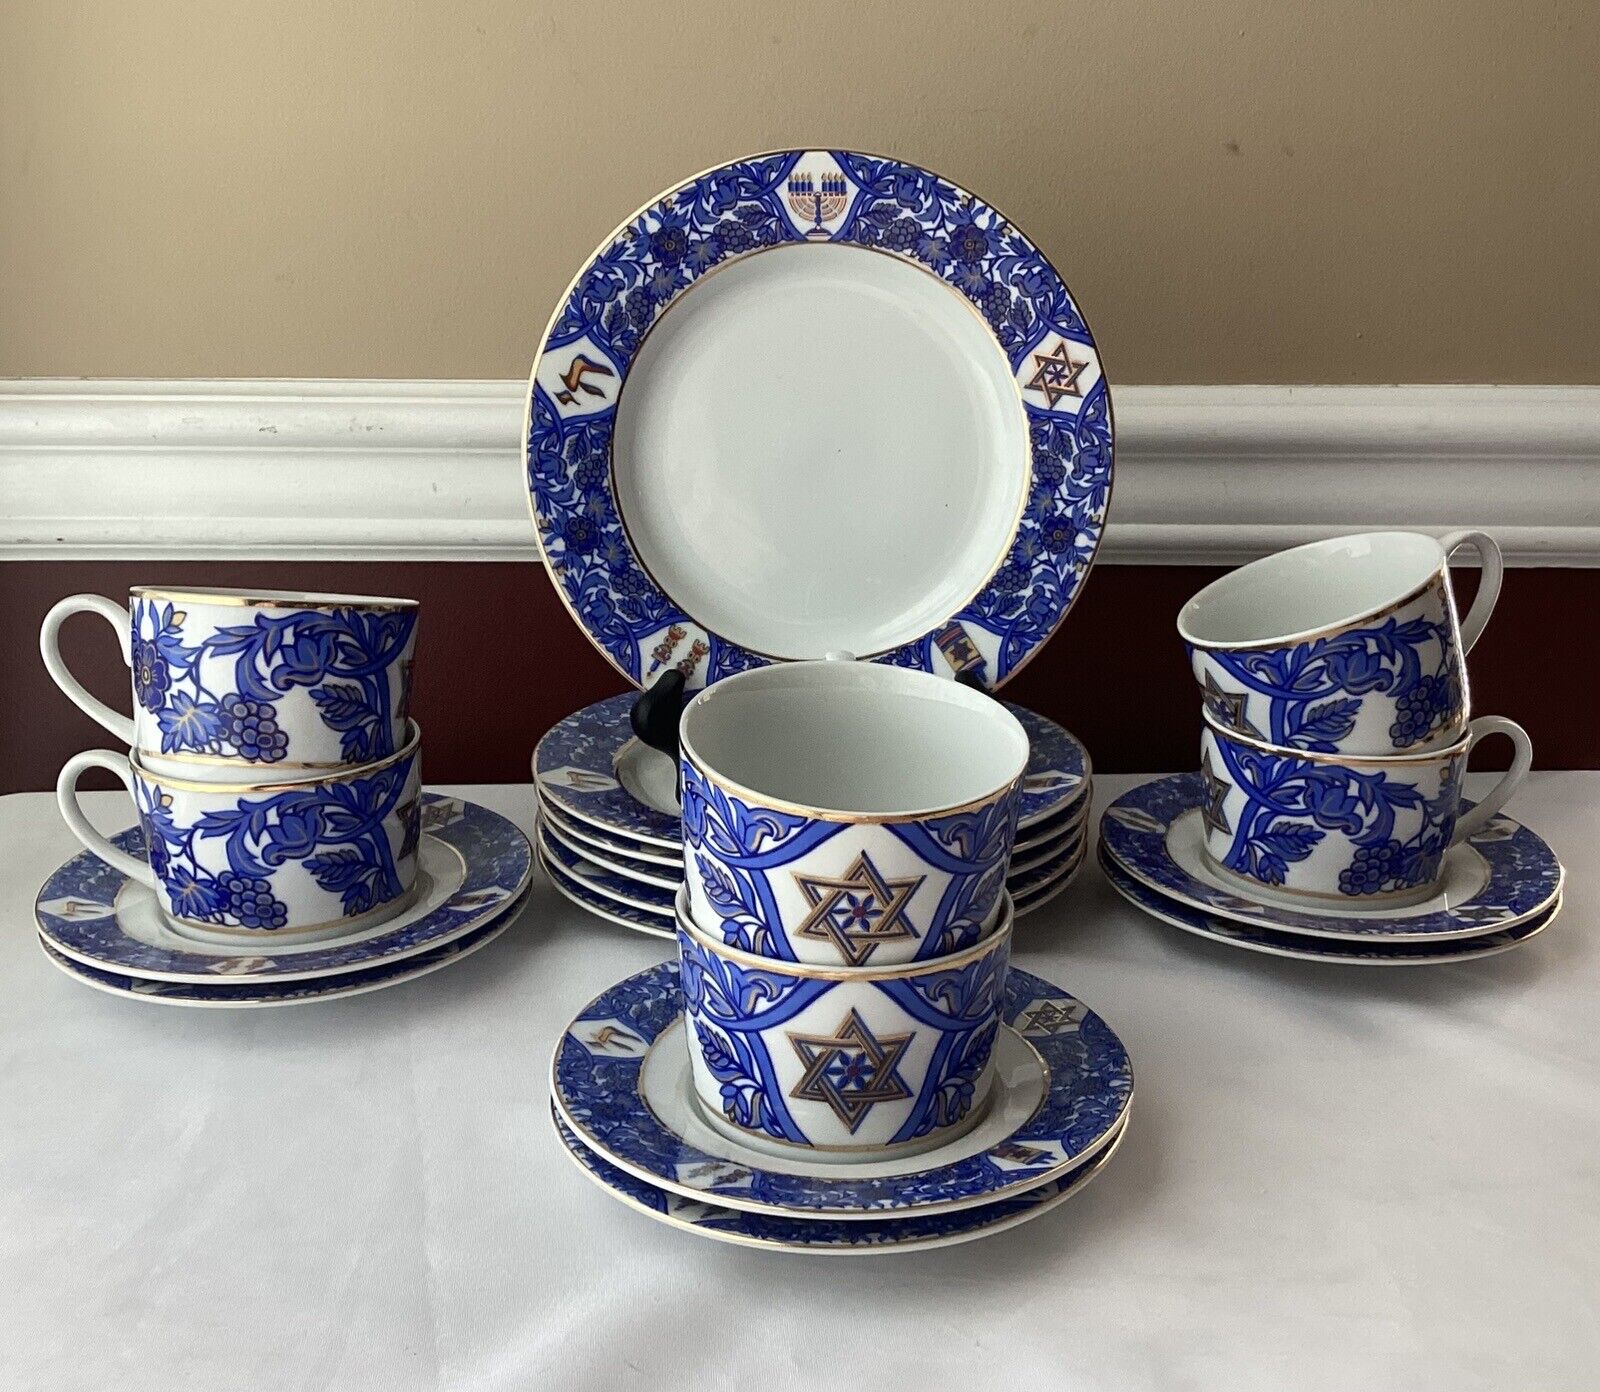 VTG 18-piece American Atelier Tradition Tea & Plate Set, Hanukkah/ Judaism